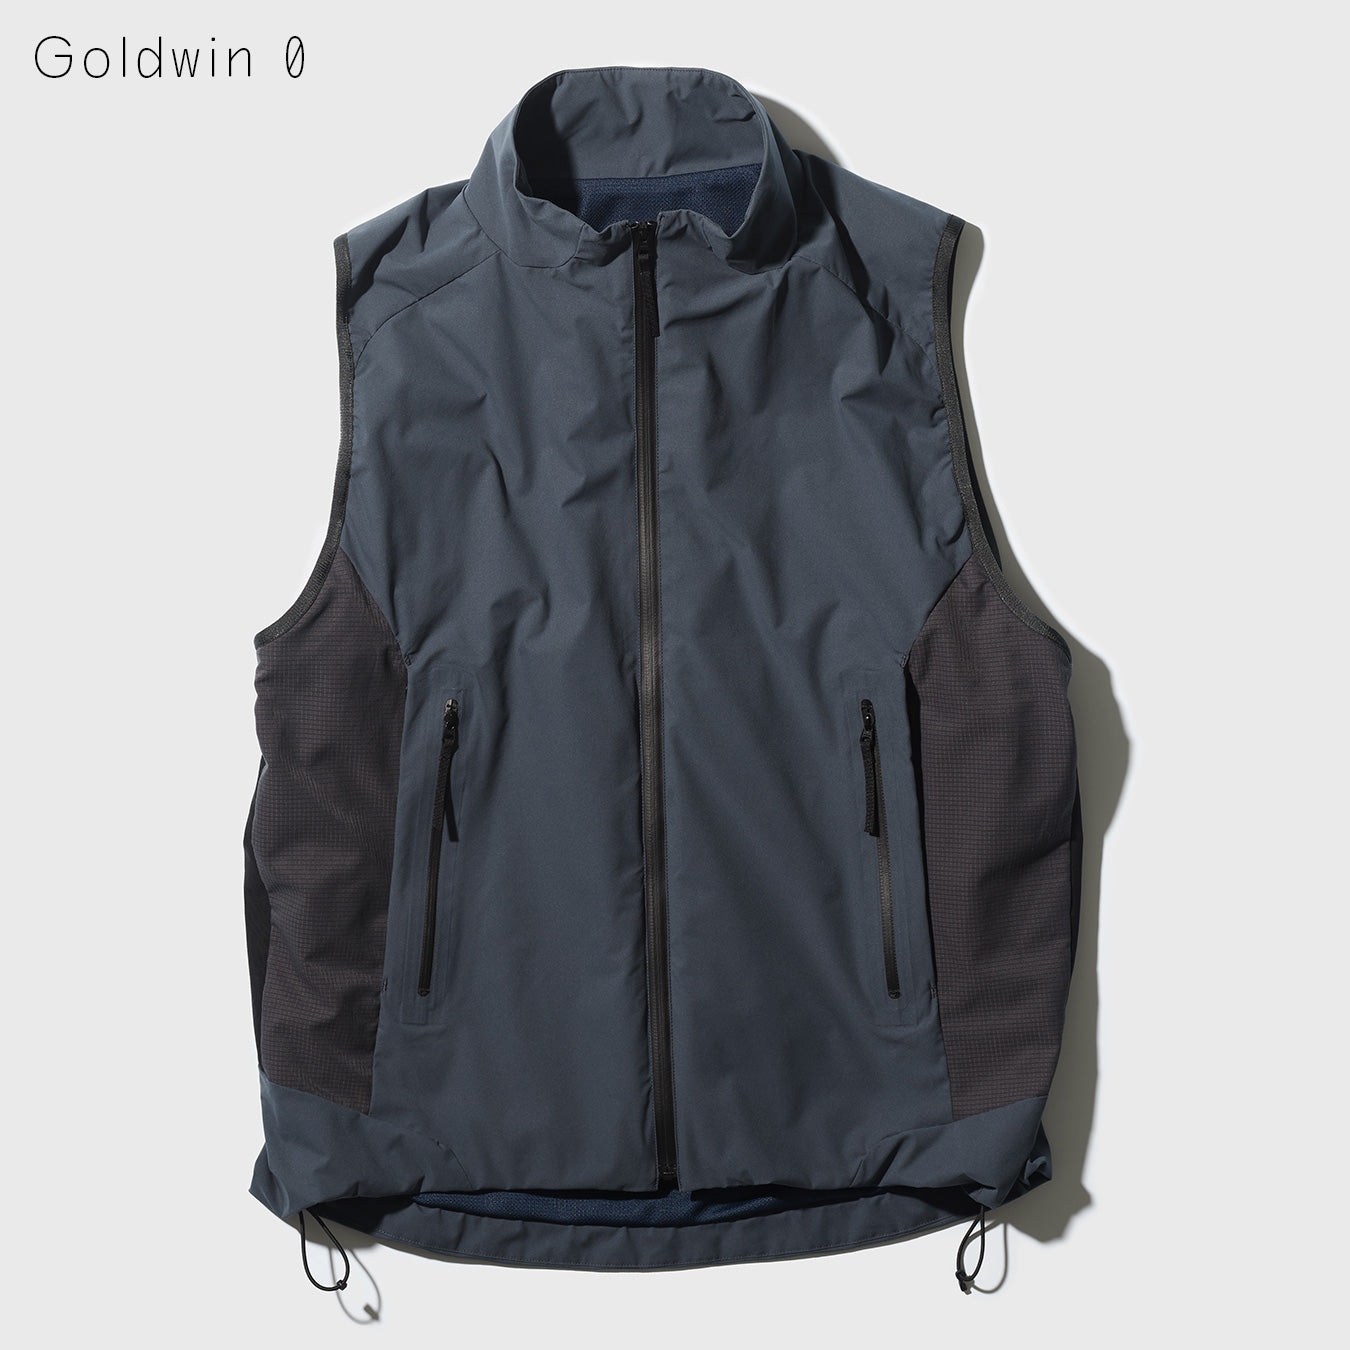 Goldwin 0 Back-pack Vest サイズ2-